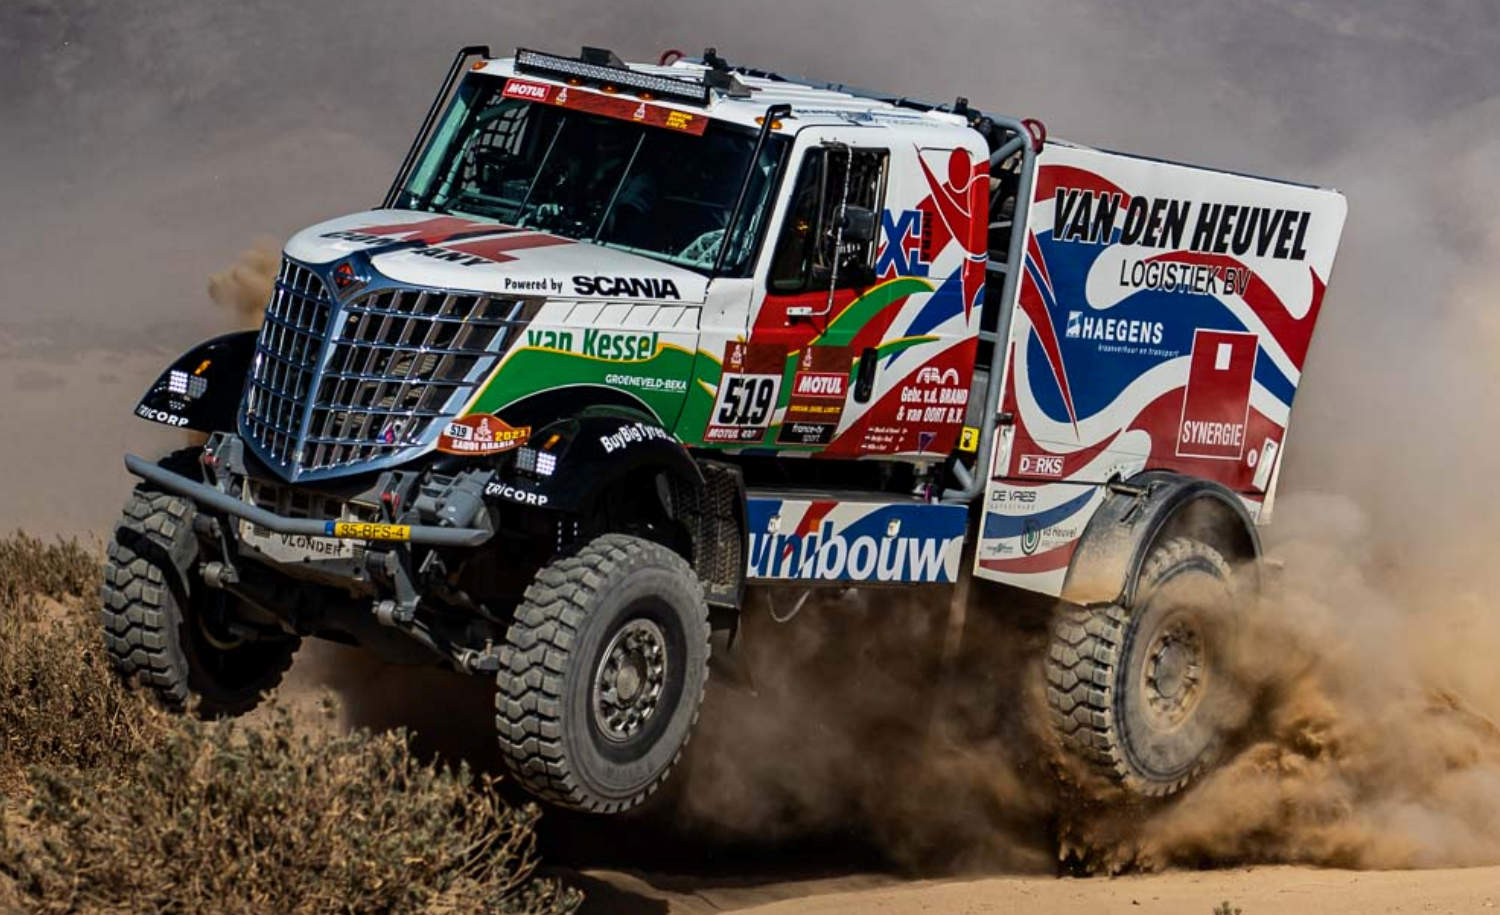 Dakar 2024: Team Dakarspeed announces that it will not race next year's edition of the Dakar Rally.